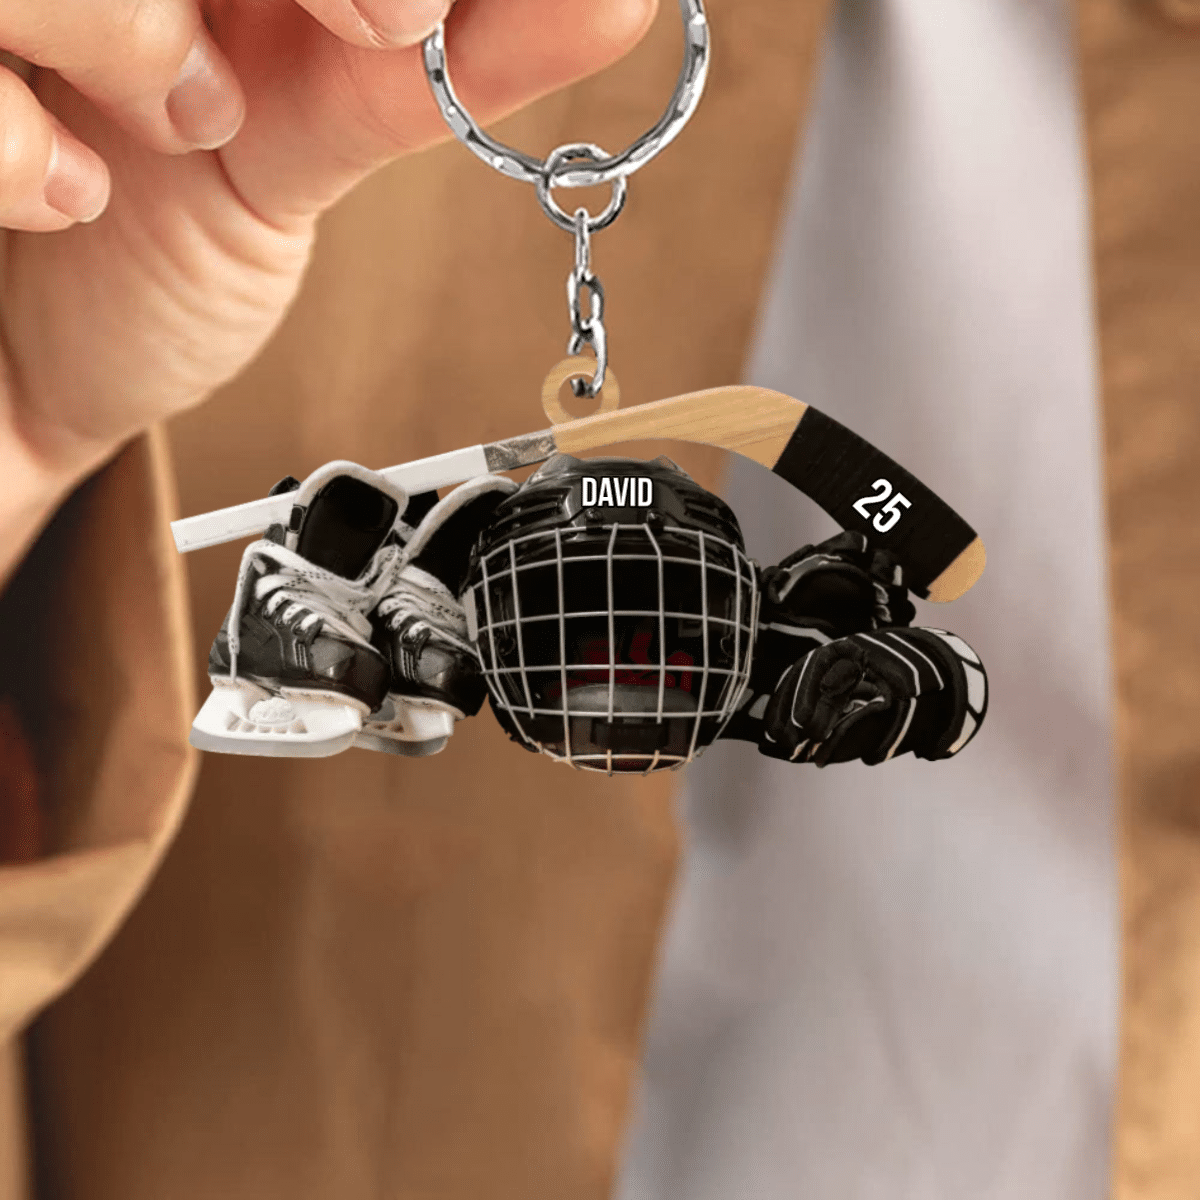 Personalized Acrylic Keychain Hocket Skates Helmet And Stick Gift For Hockey Lover